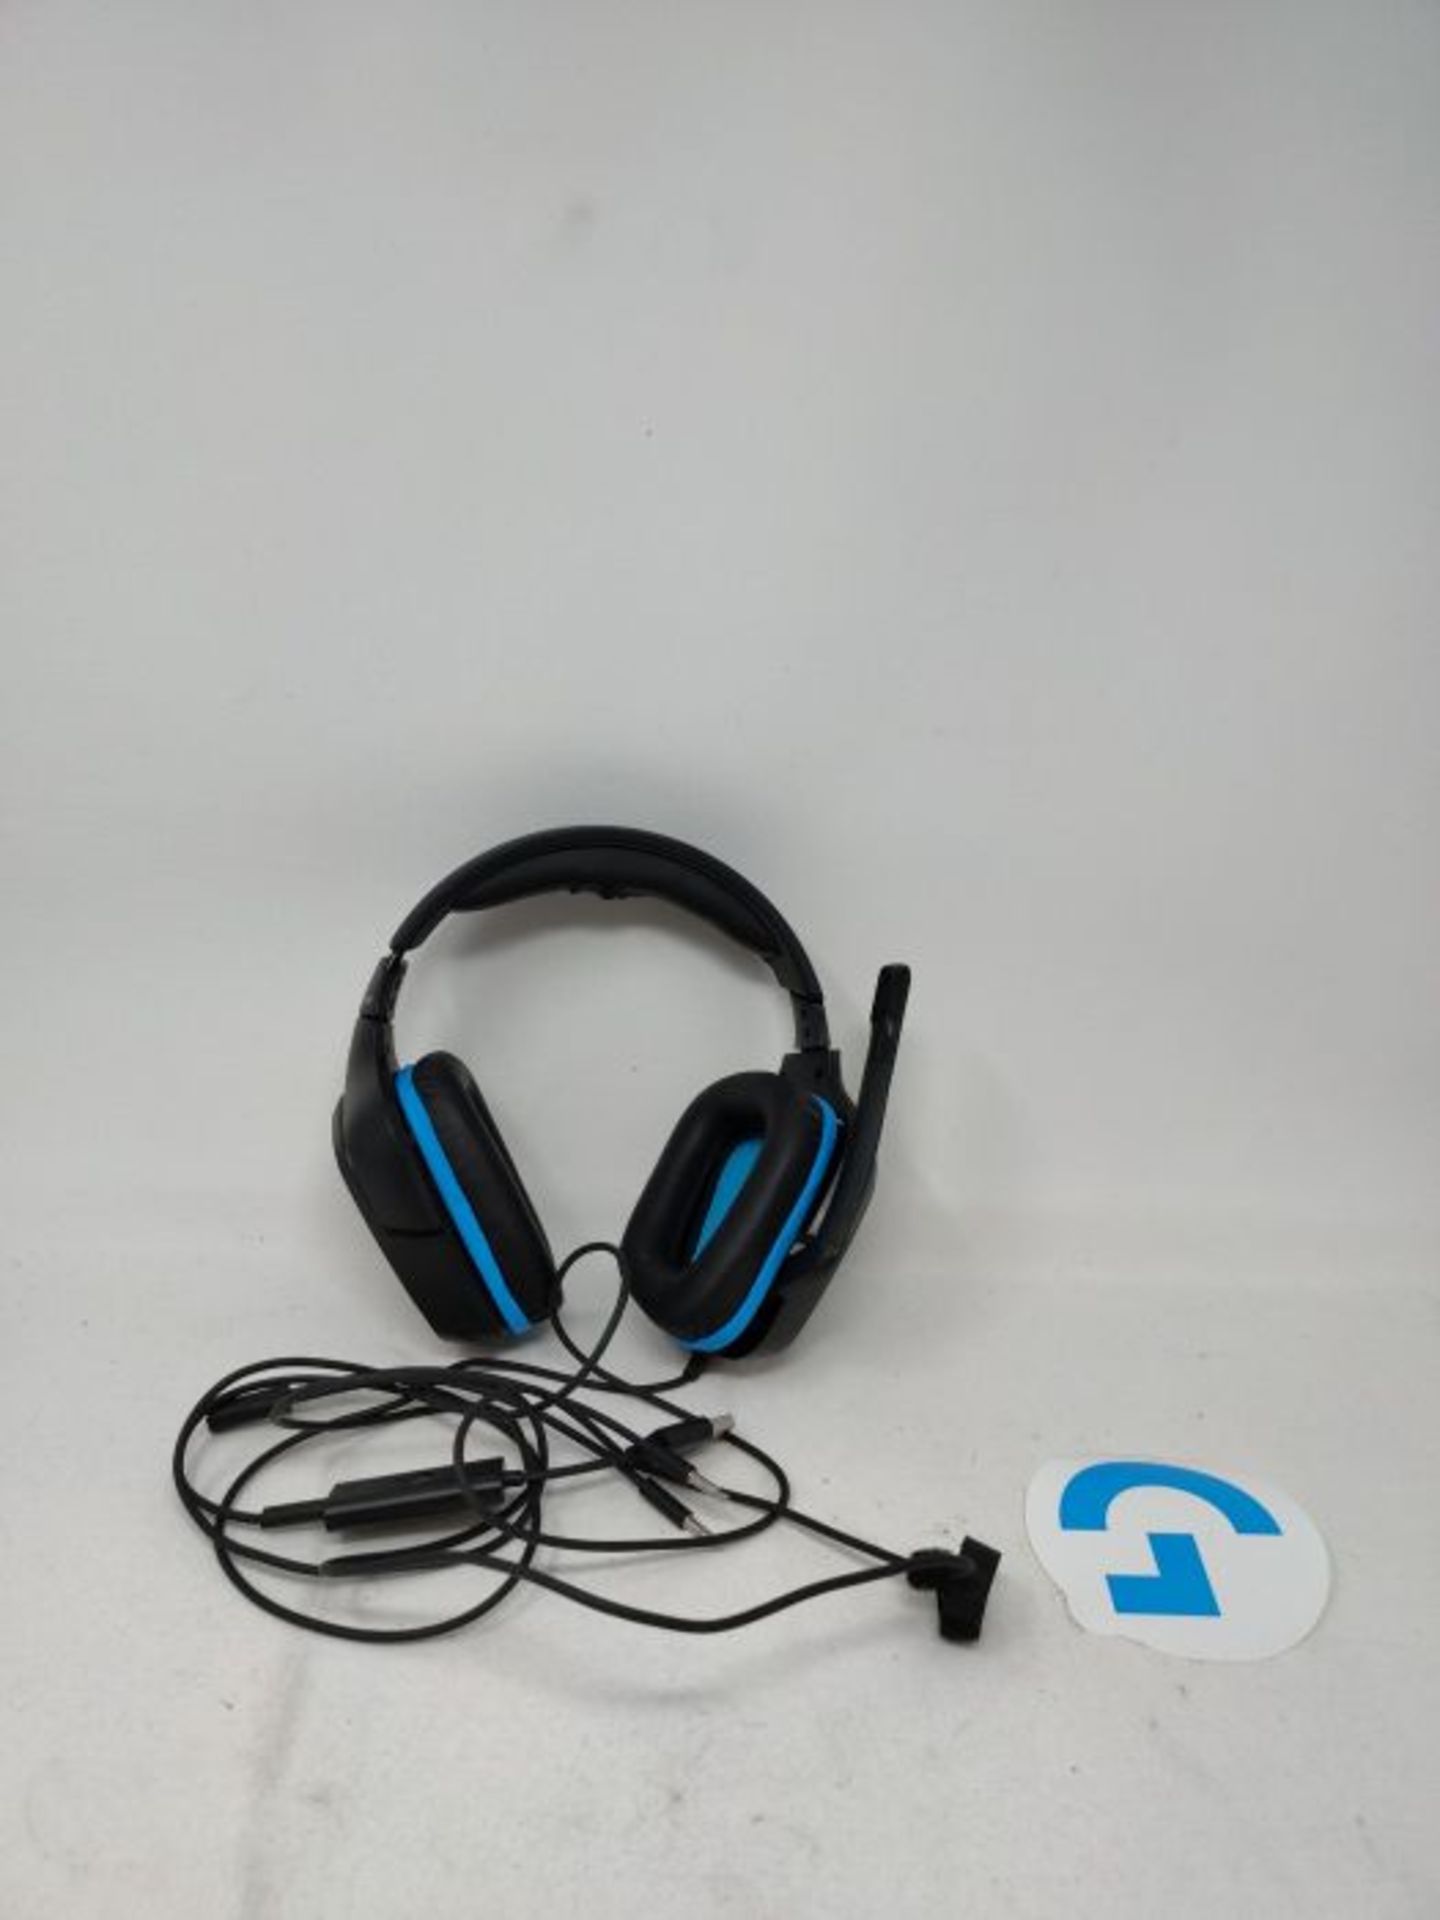 Logitech G432 kabelgebundenes Gaming-Headset, 7.1 Surround Sound, DTS Headphone:X 2.0, - Image 3 of 3